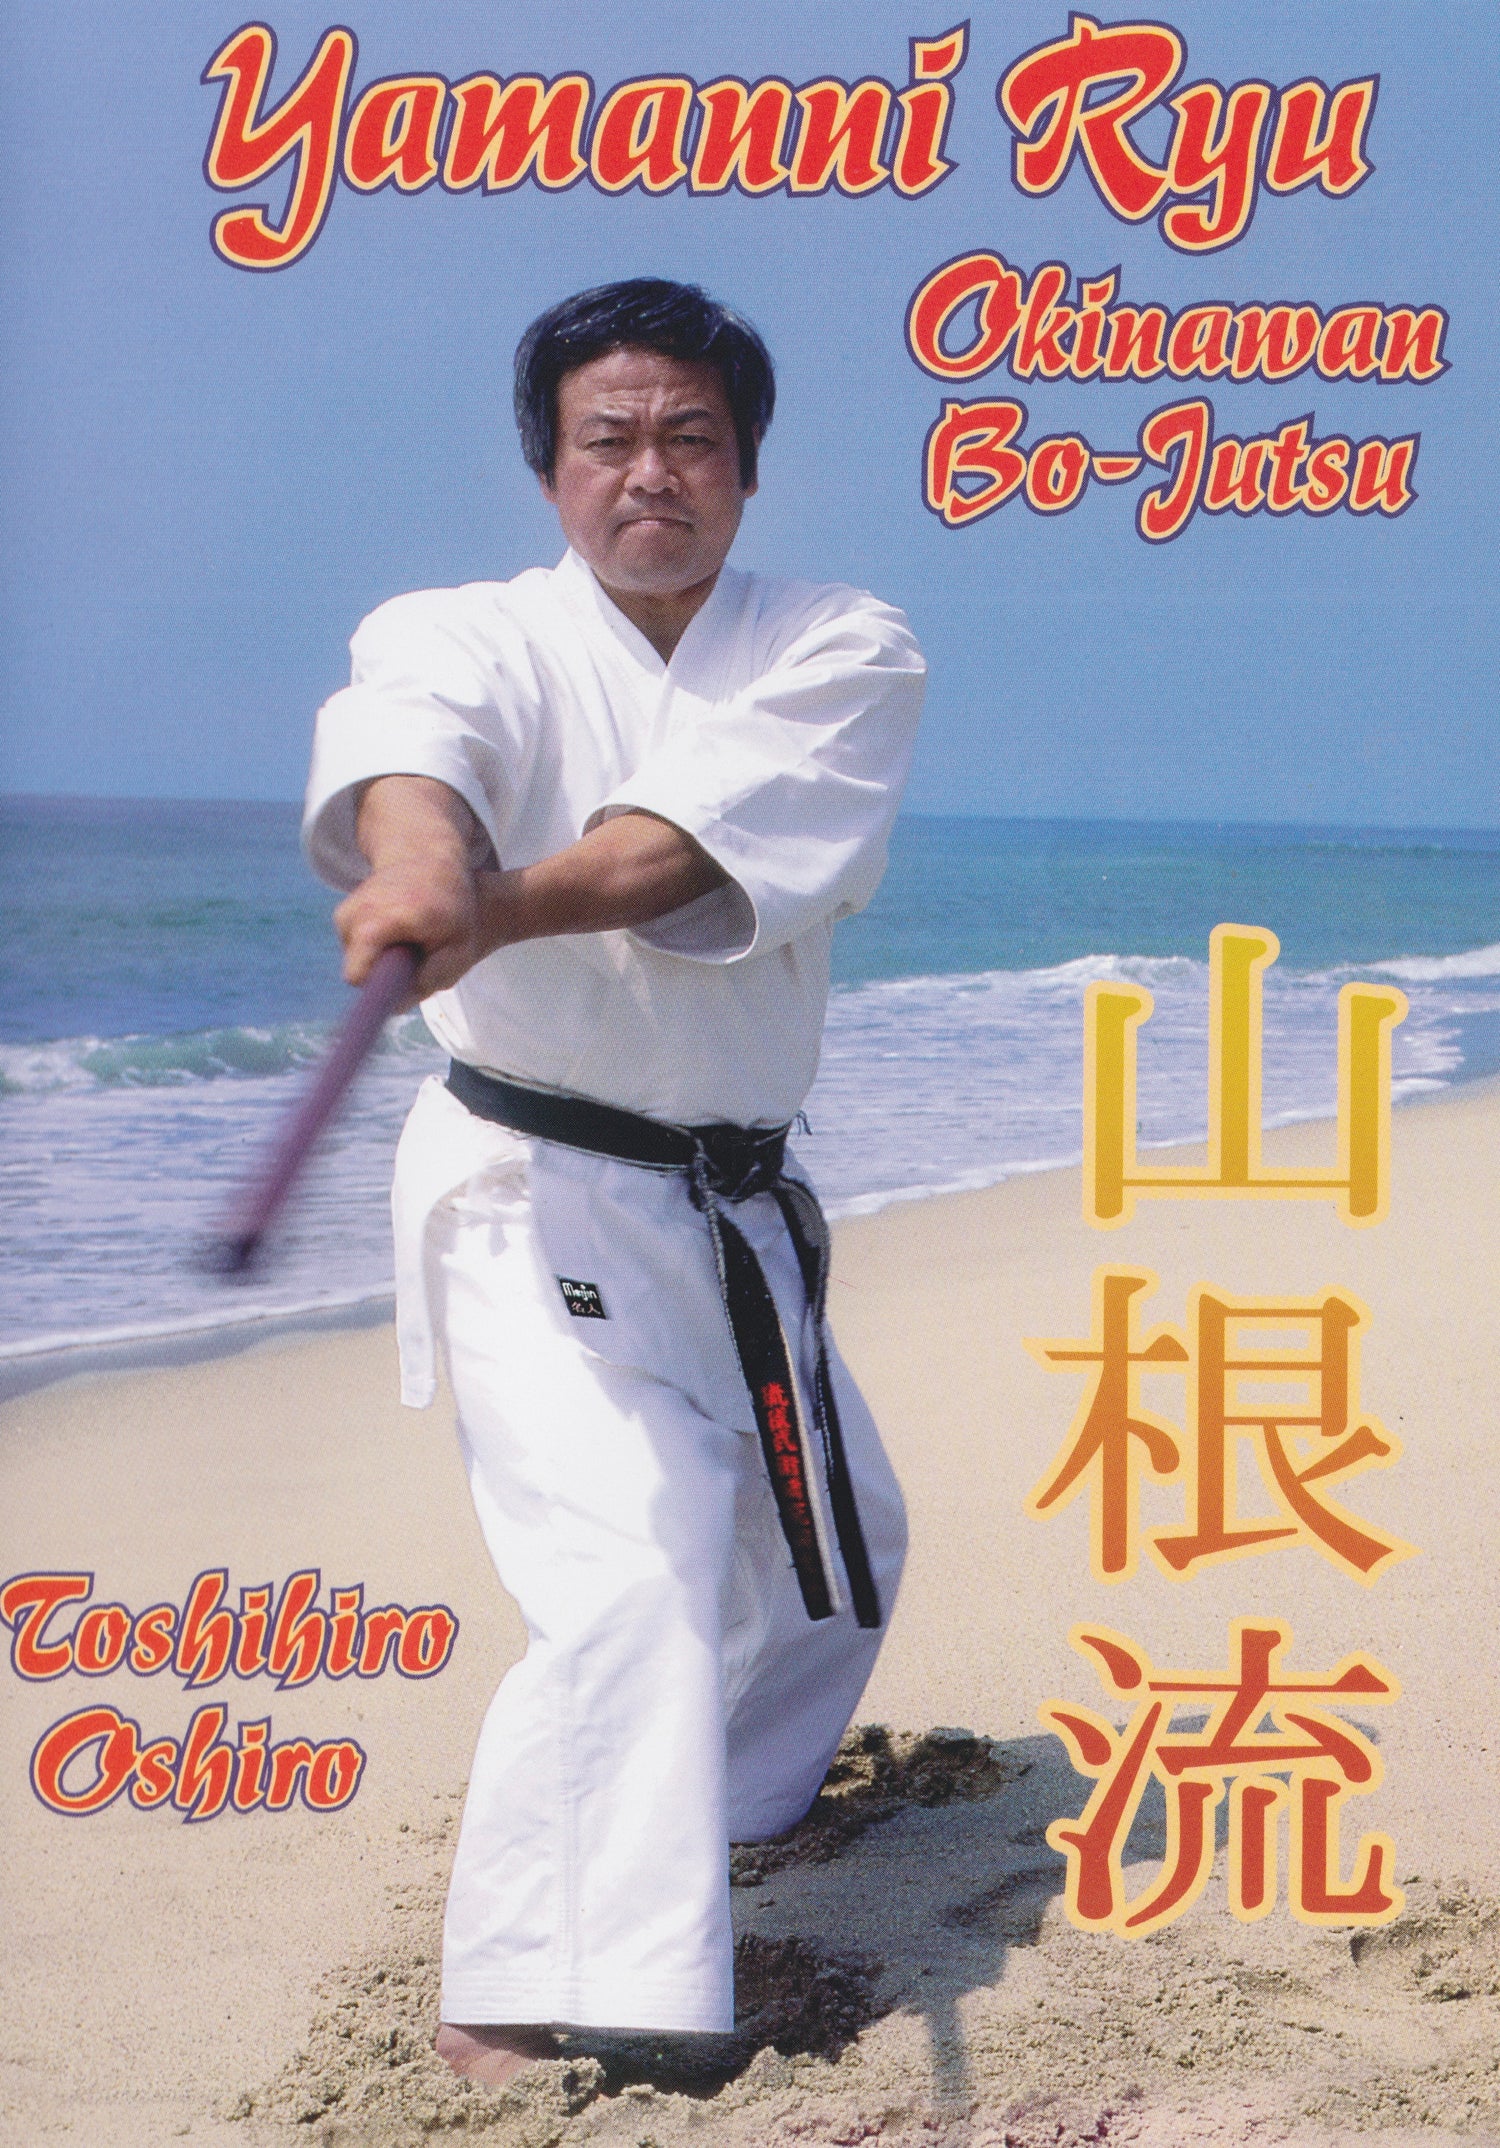 Yamanni Ryu: Okinawan Bo-Jutsu DVD with Toshihiro Oshiro